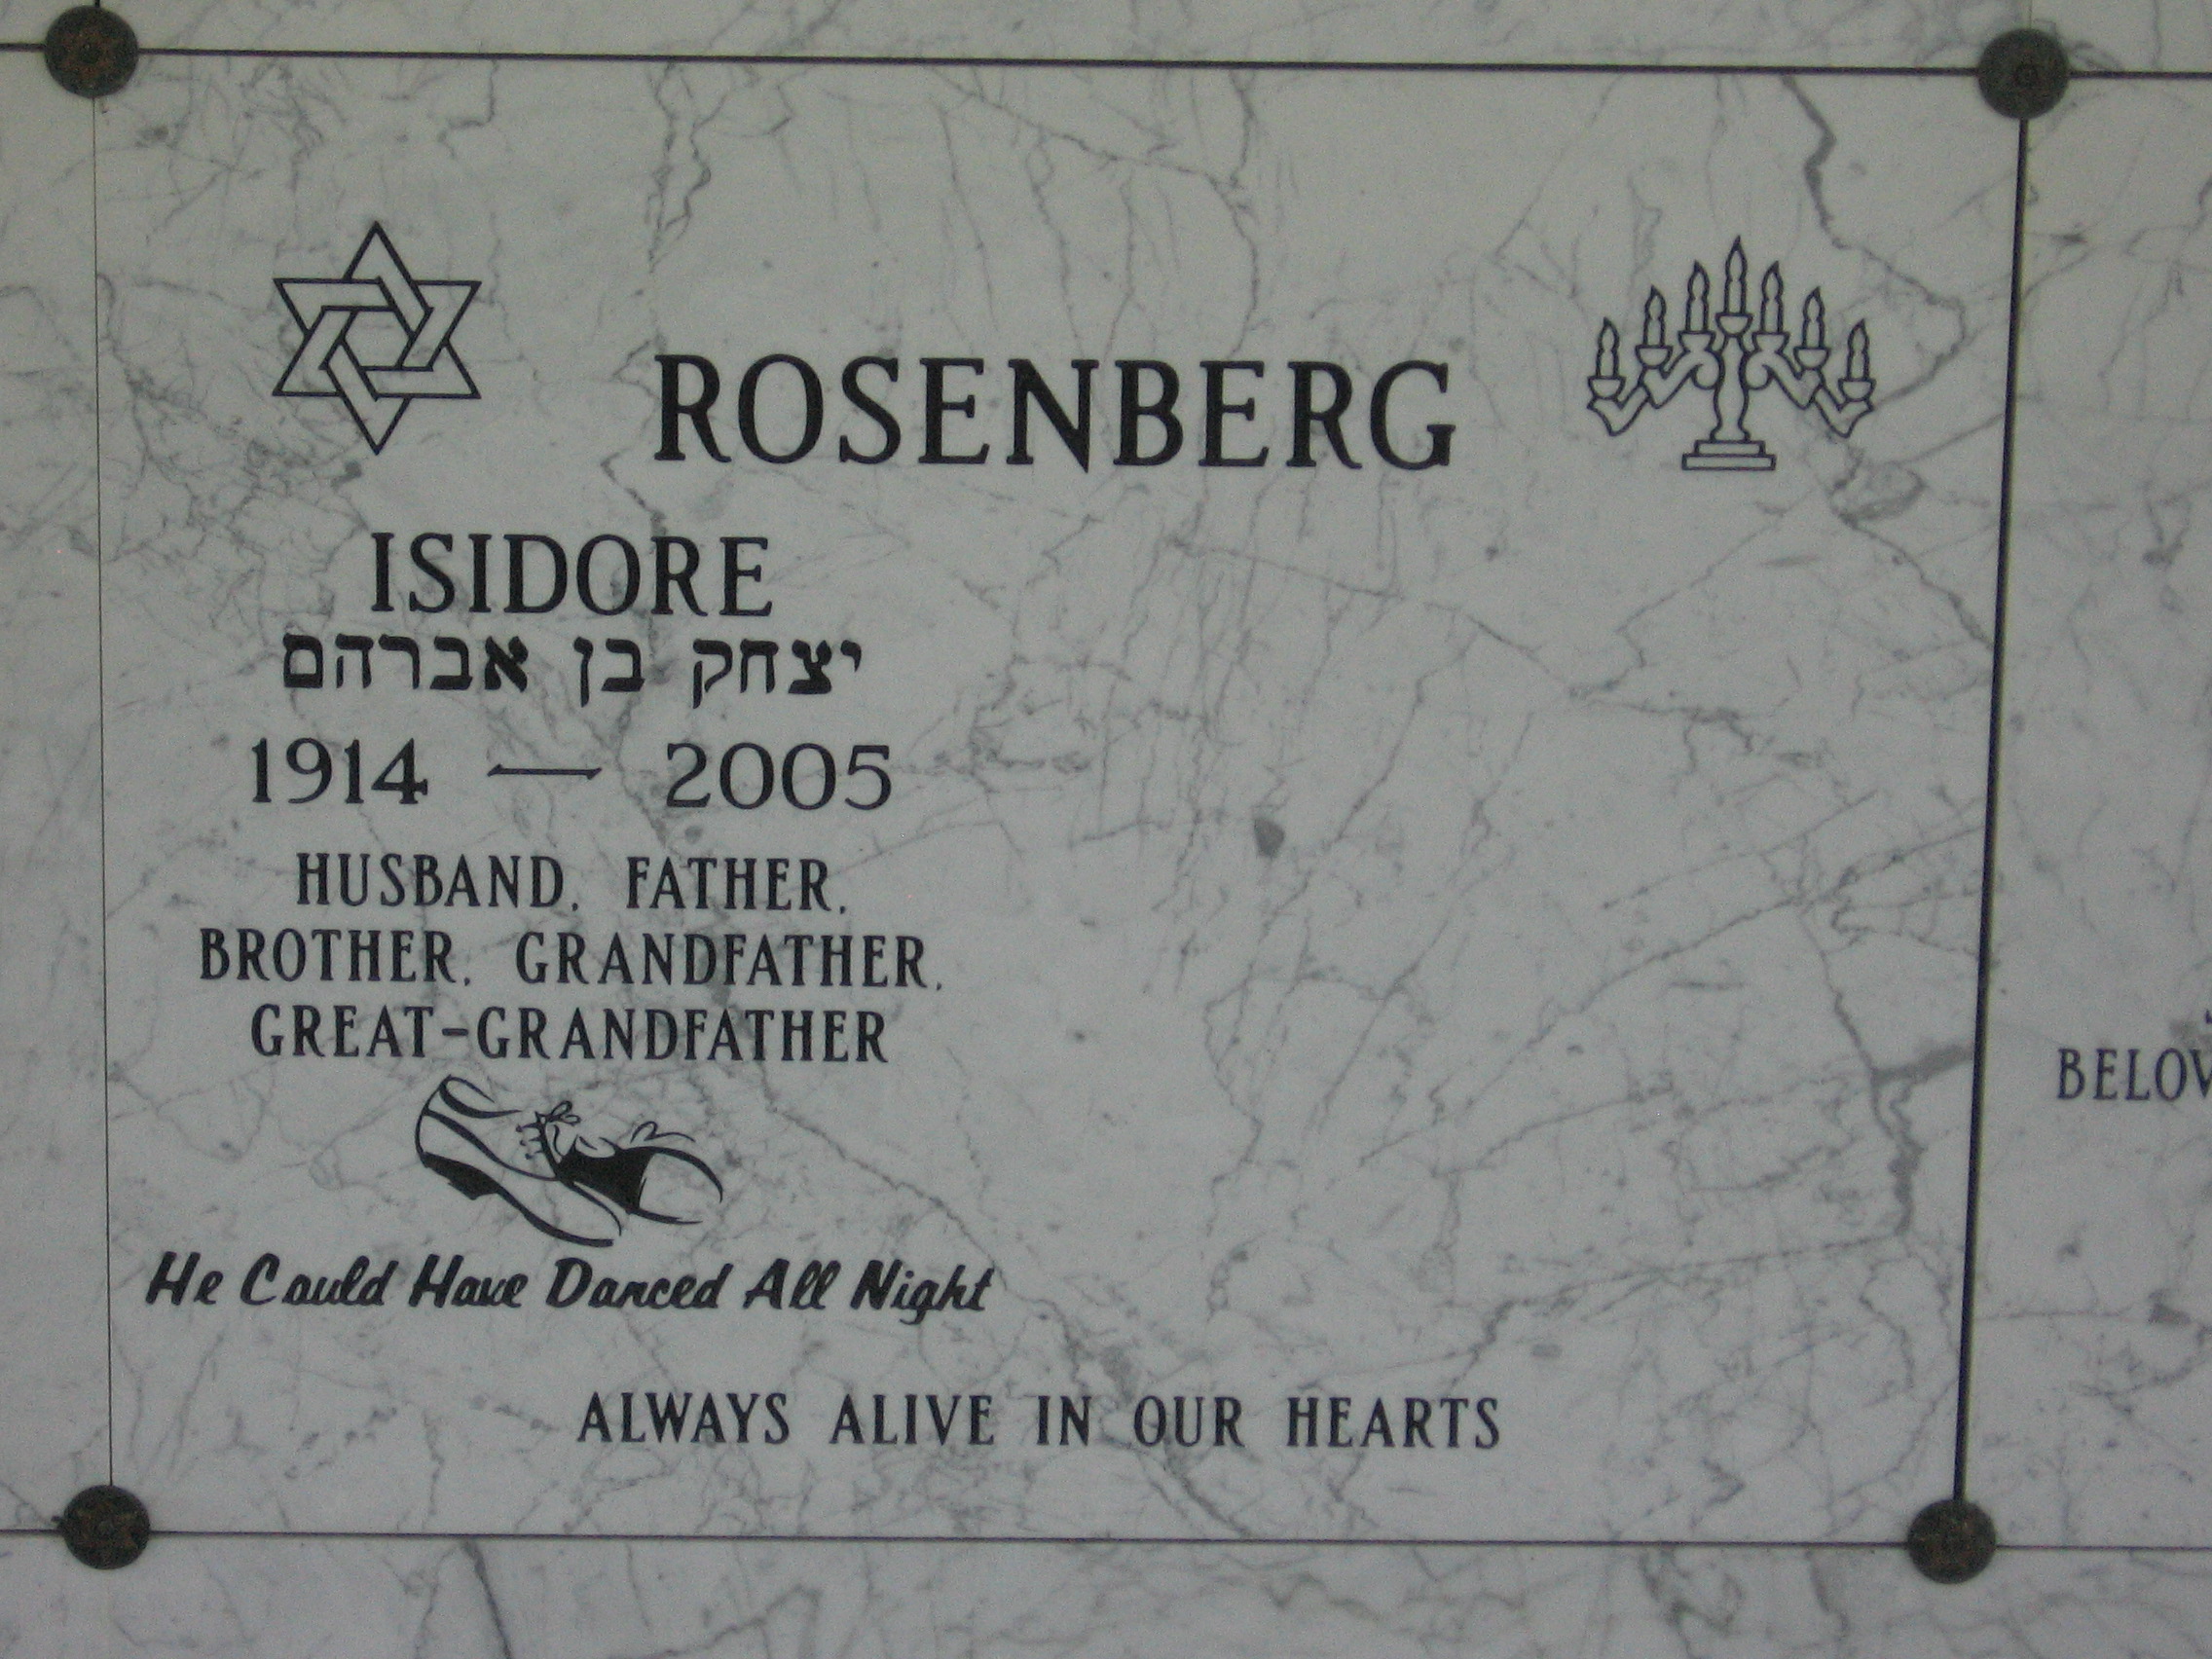 Isidore Rosenberg